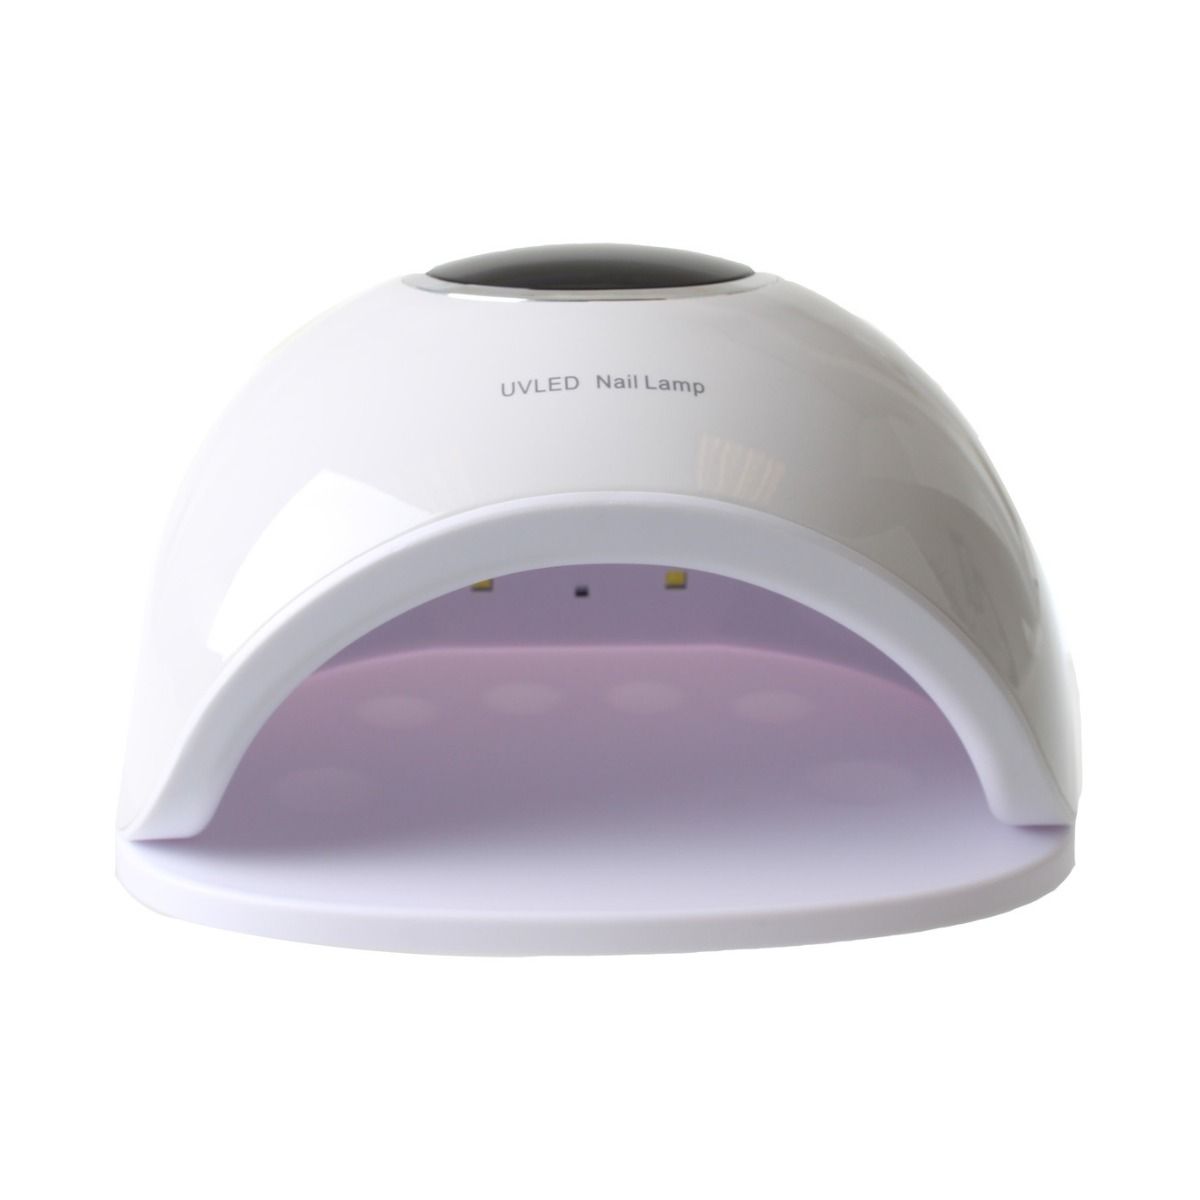 Somber Gooi instant Nailphora Soft Curing LED/UV Light 48W kopen - NagelMusthaves - Voor  23:59u, morgen in huis